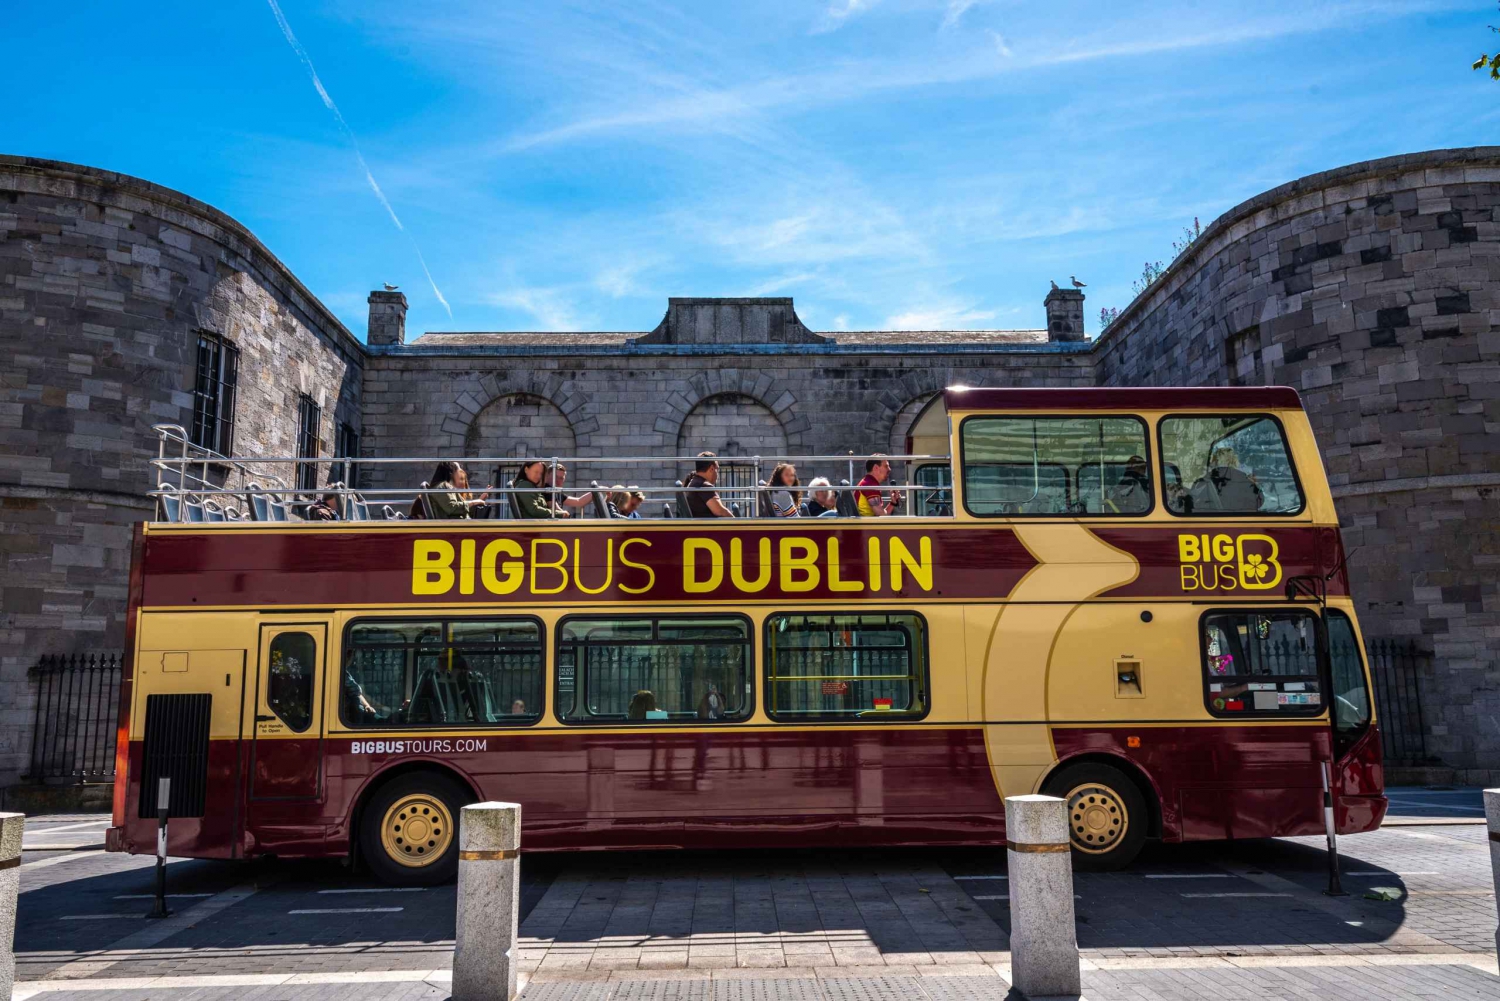 Dublin: Go City Explorer Pass - Choose 3 to 7 Attractions